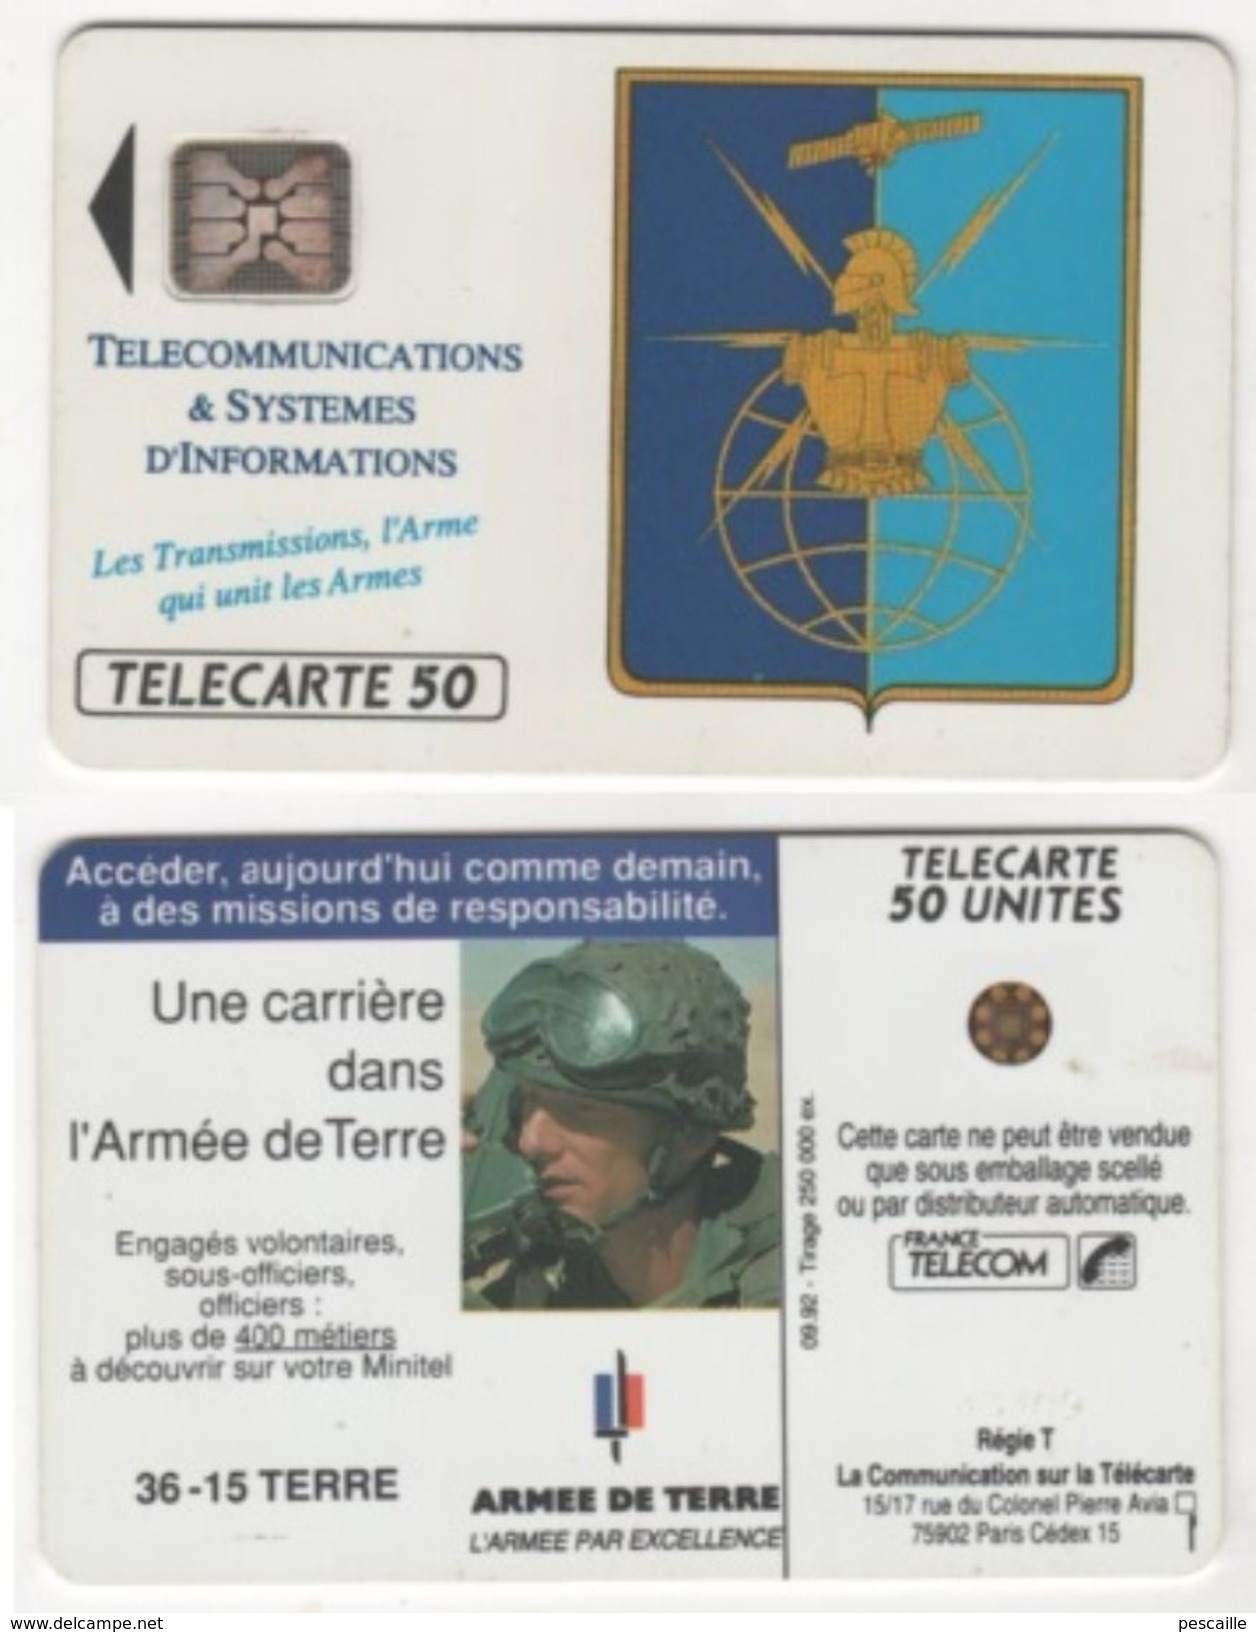 TELECARTE 50 UNITES ARMEE DE TERRE - LES TRANSMISSIONS L'ARME QUI UNIT LES ARMES - 09 92 TIRAGE 250 000 EX - Armée